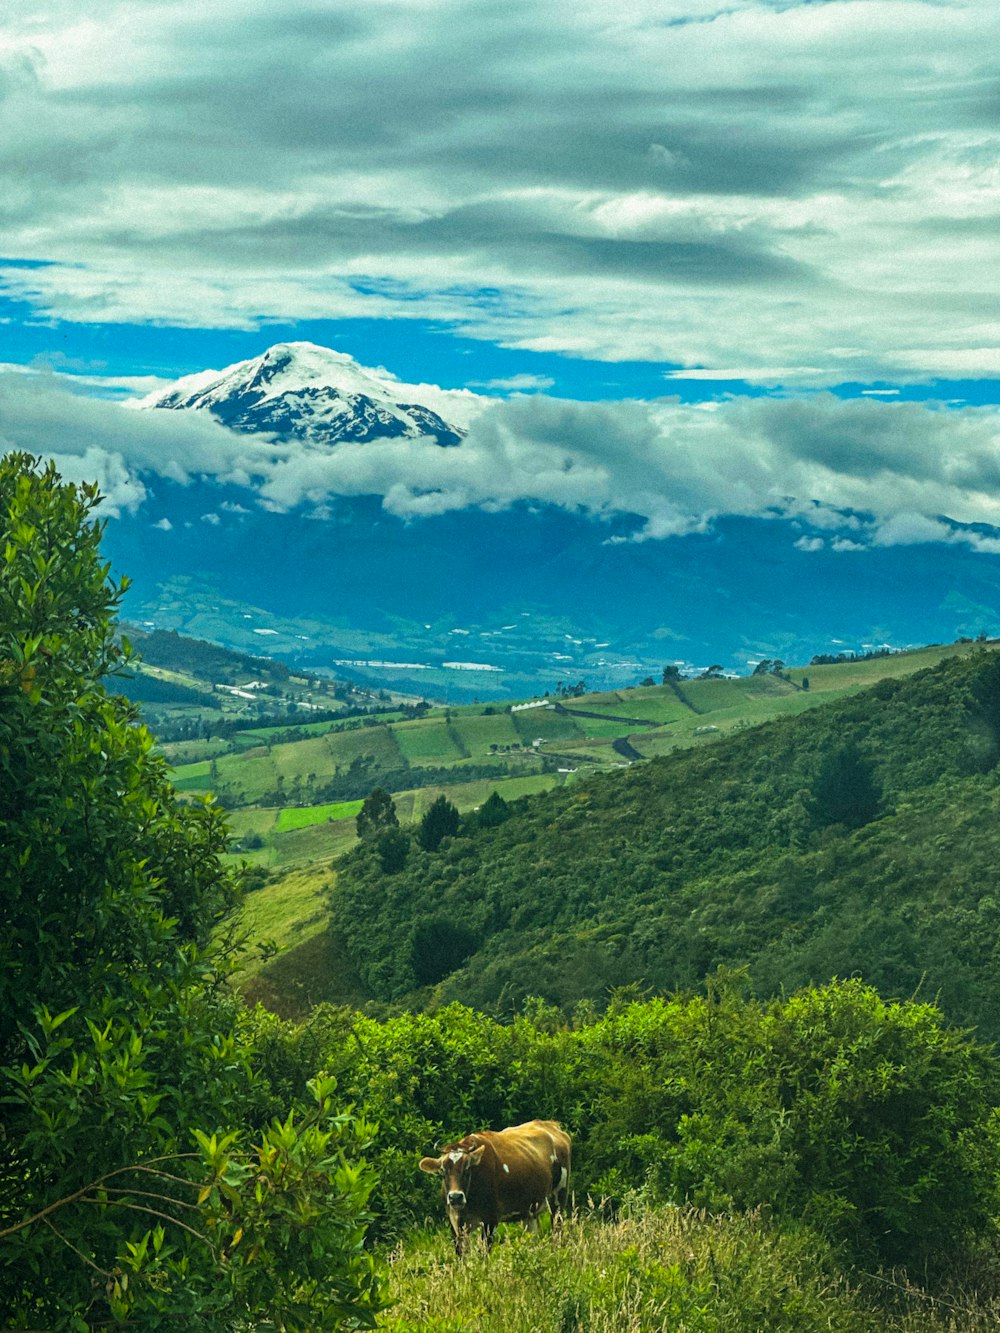 a cow standing on a lush green hillside